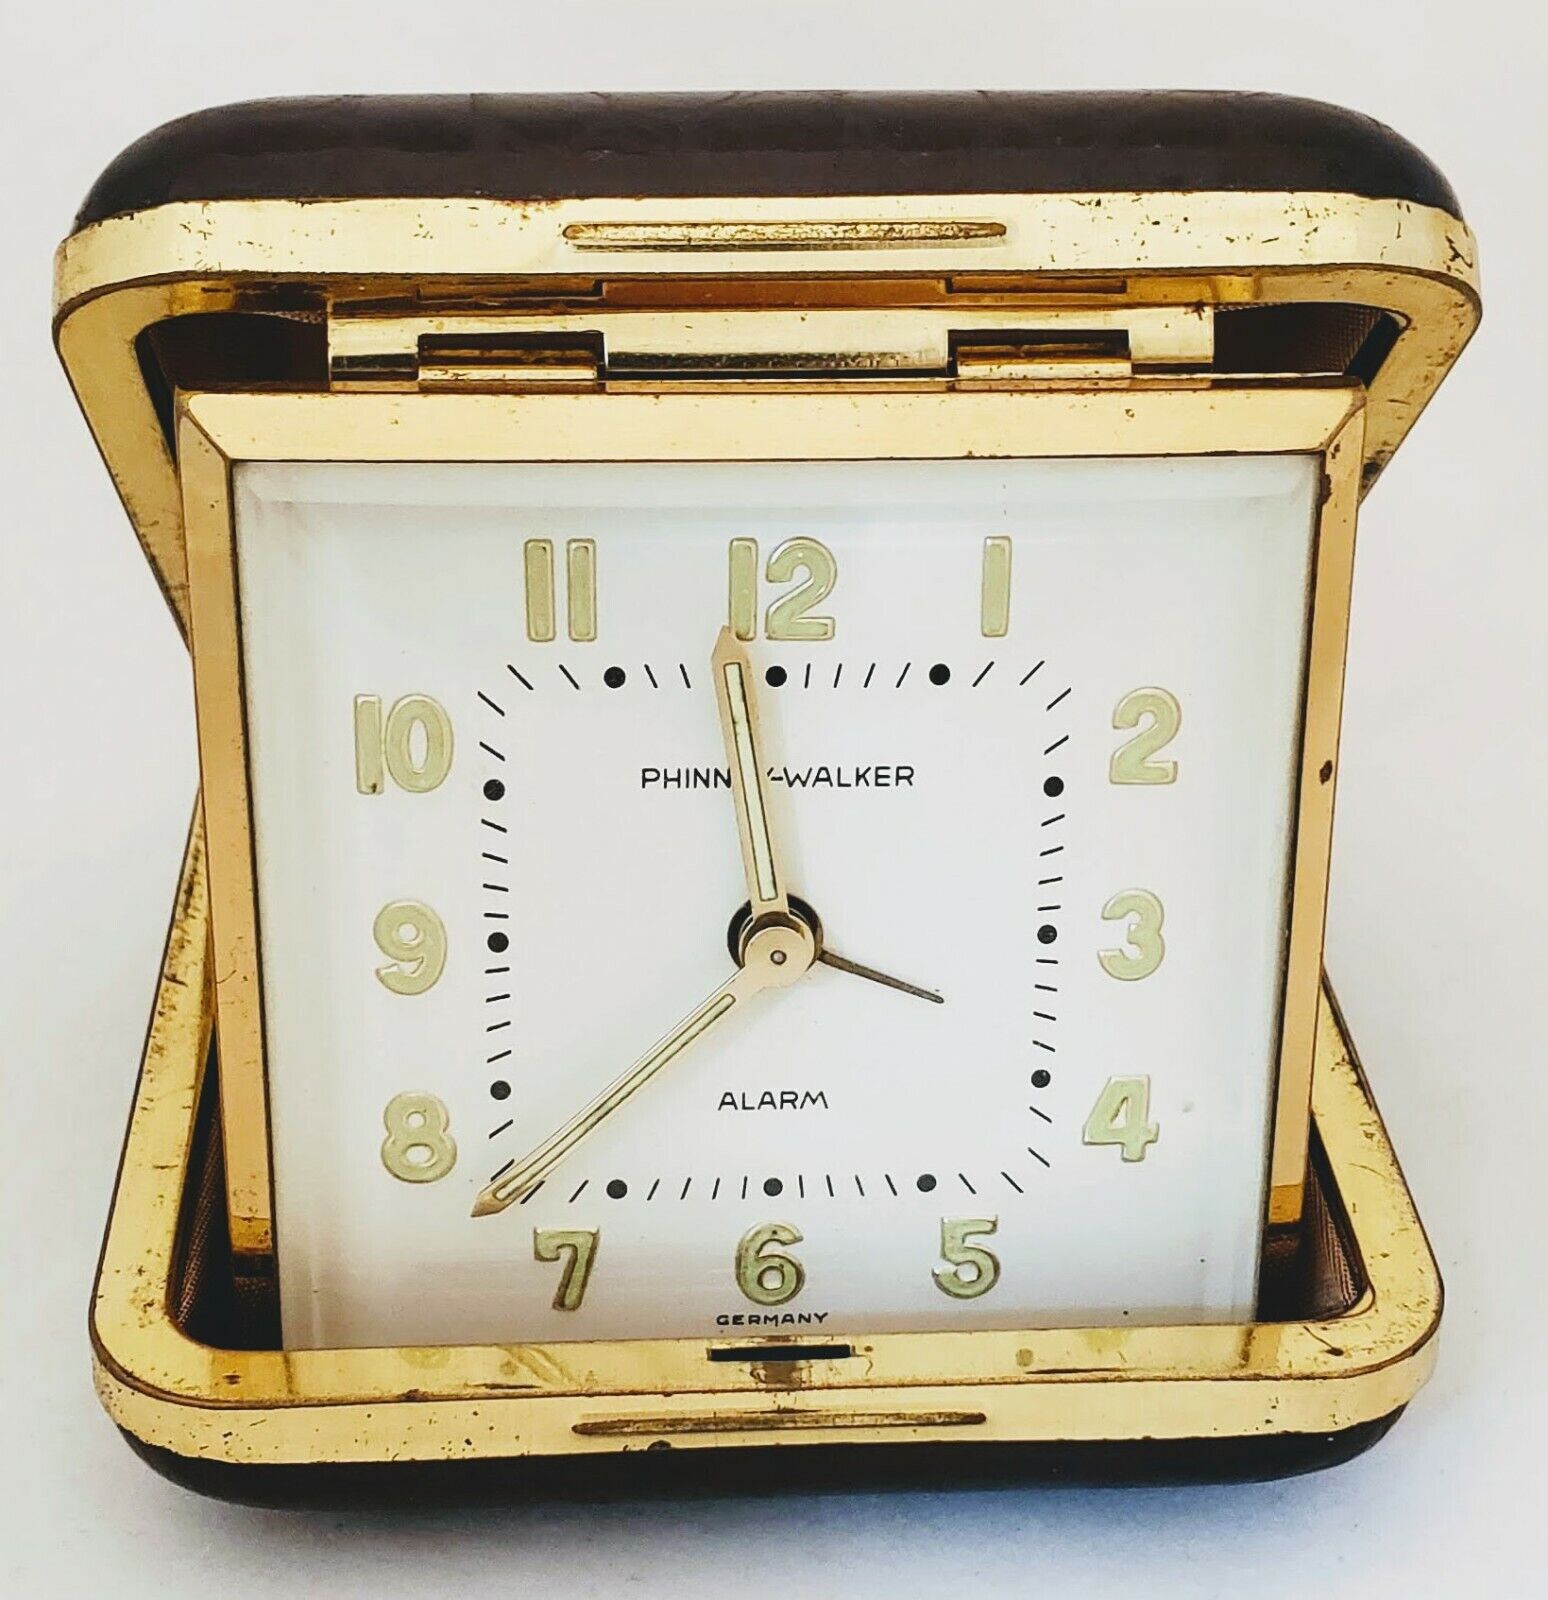 Phinney-Walker Vintage Travel Alarm Clock from Germany